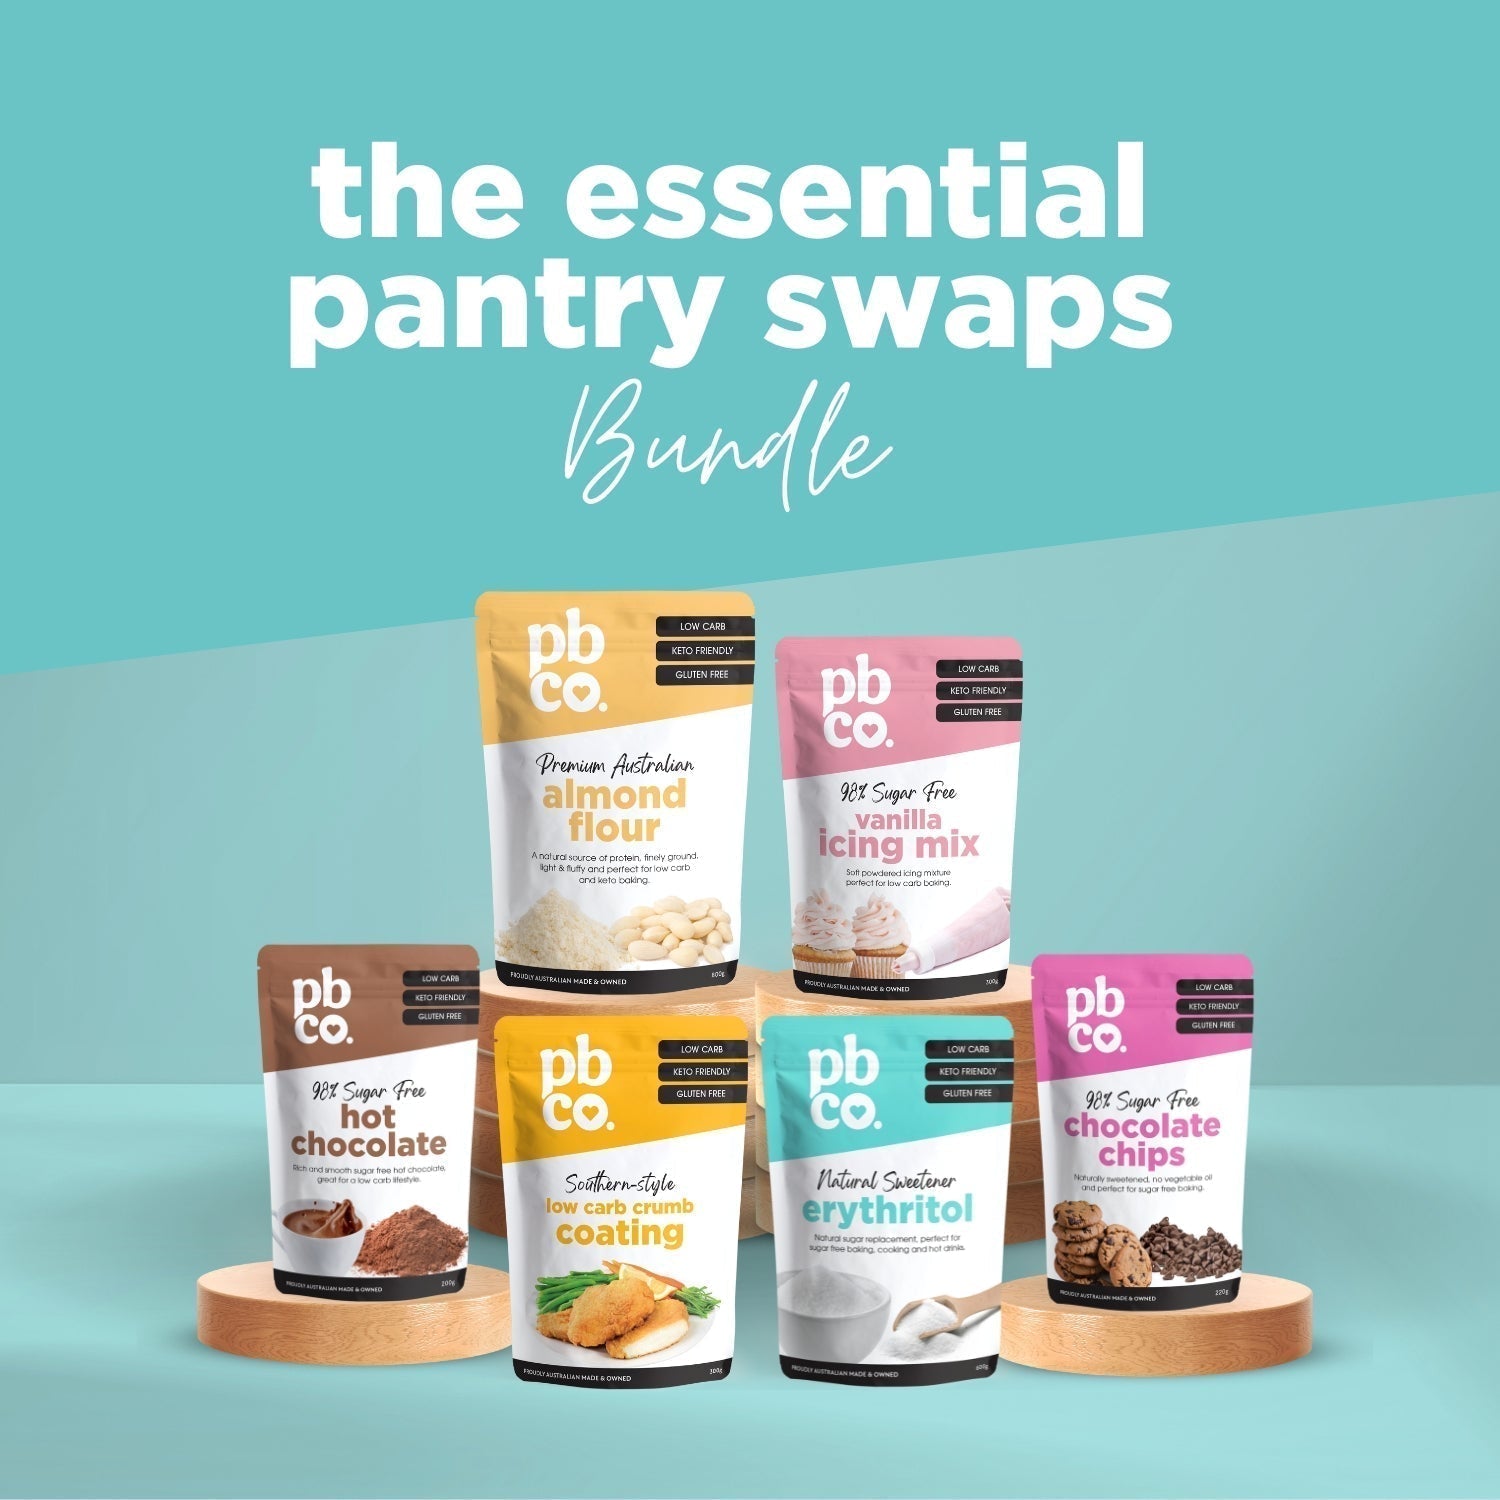 Essential Pantry Swaps Bundle - Low carb & sugar free Pantry Staples - Just $86.98! Shop now at PBCo.